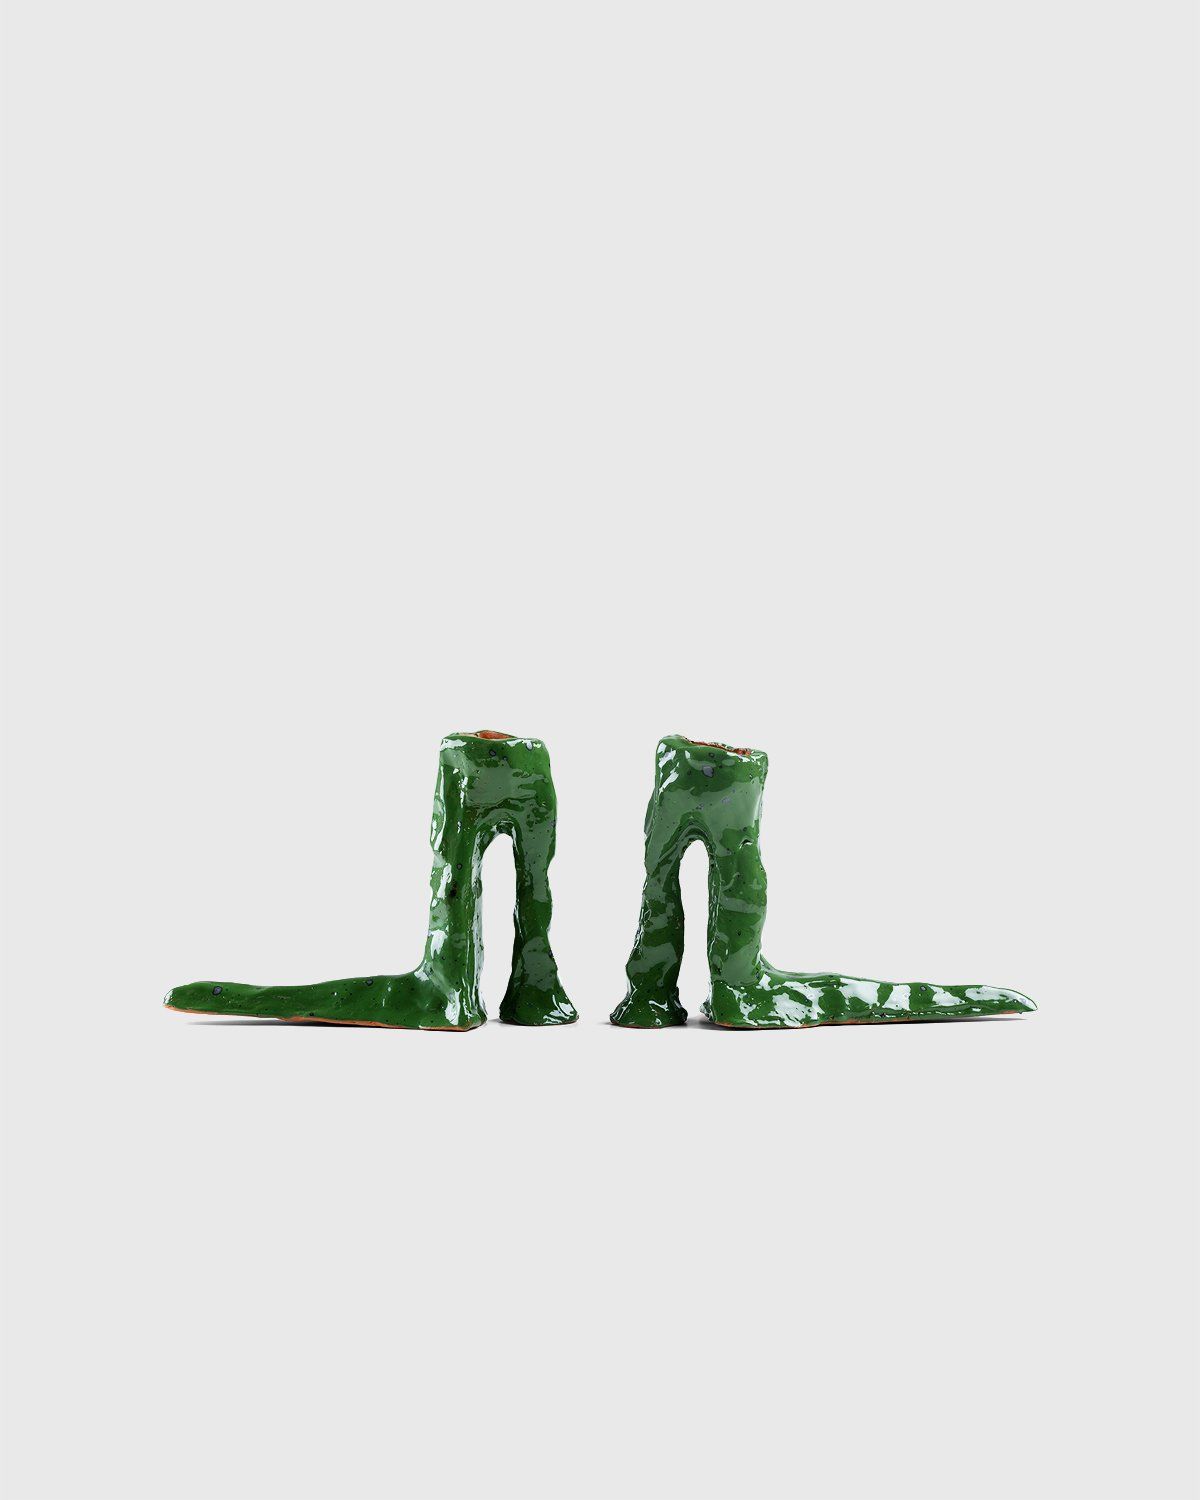 Laura Welker – Hot Legs Candle Holder Dark Green - Candles - Green - Image 1